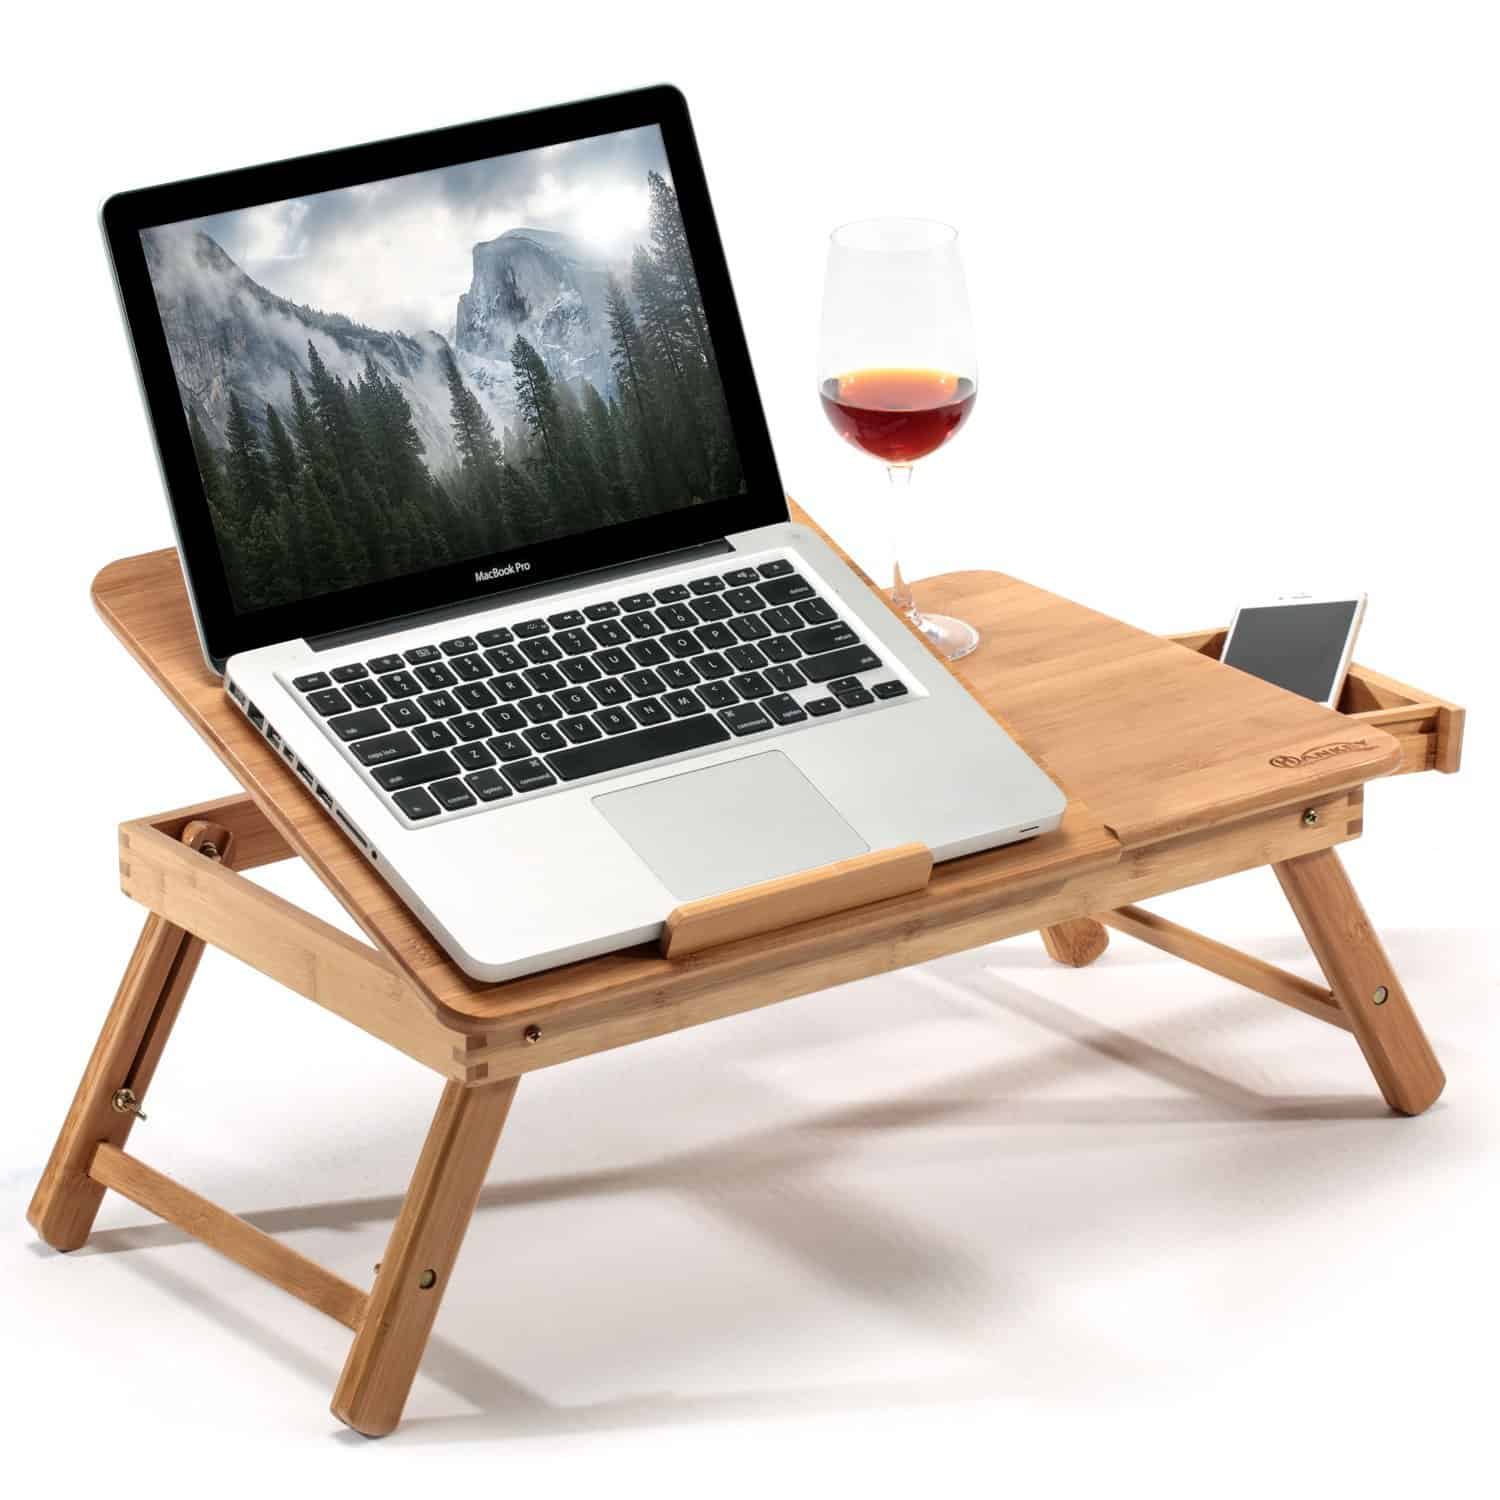 The Adjustable Hankey Bamboo LD01 Breakfast Bed Lap Desk